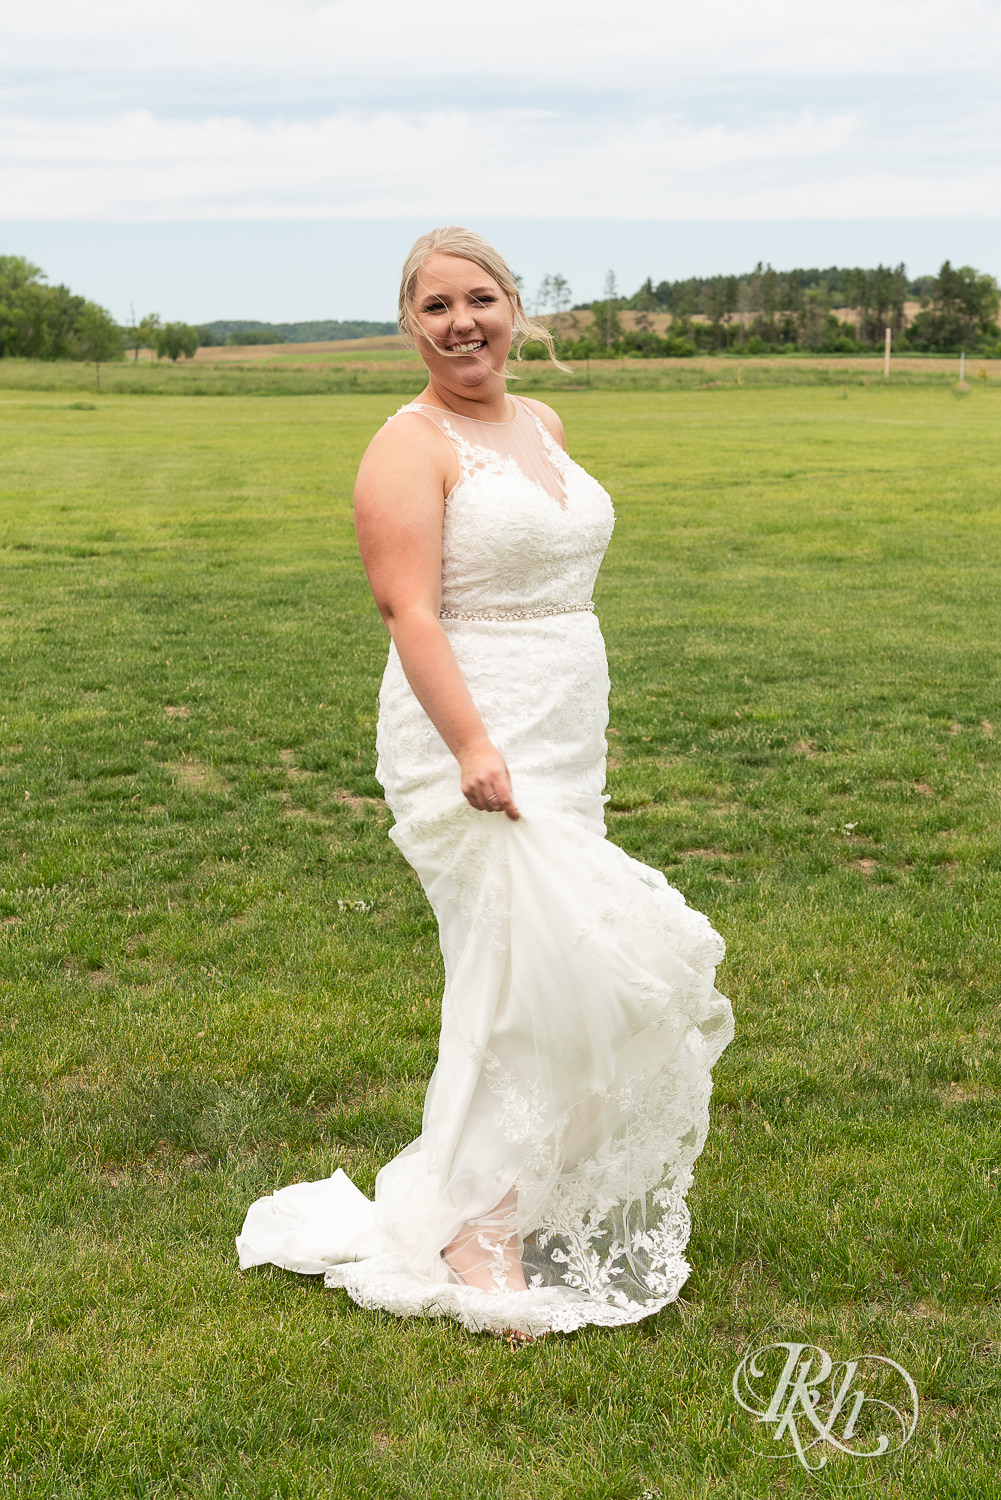 Bride laughs in field at Barn at Mirror Lake in Mondovi, Wisconsin.